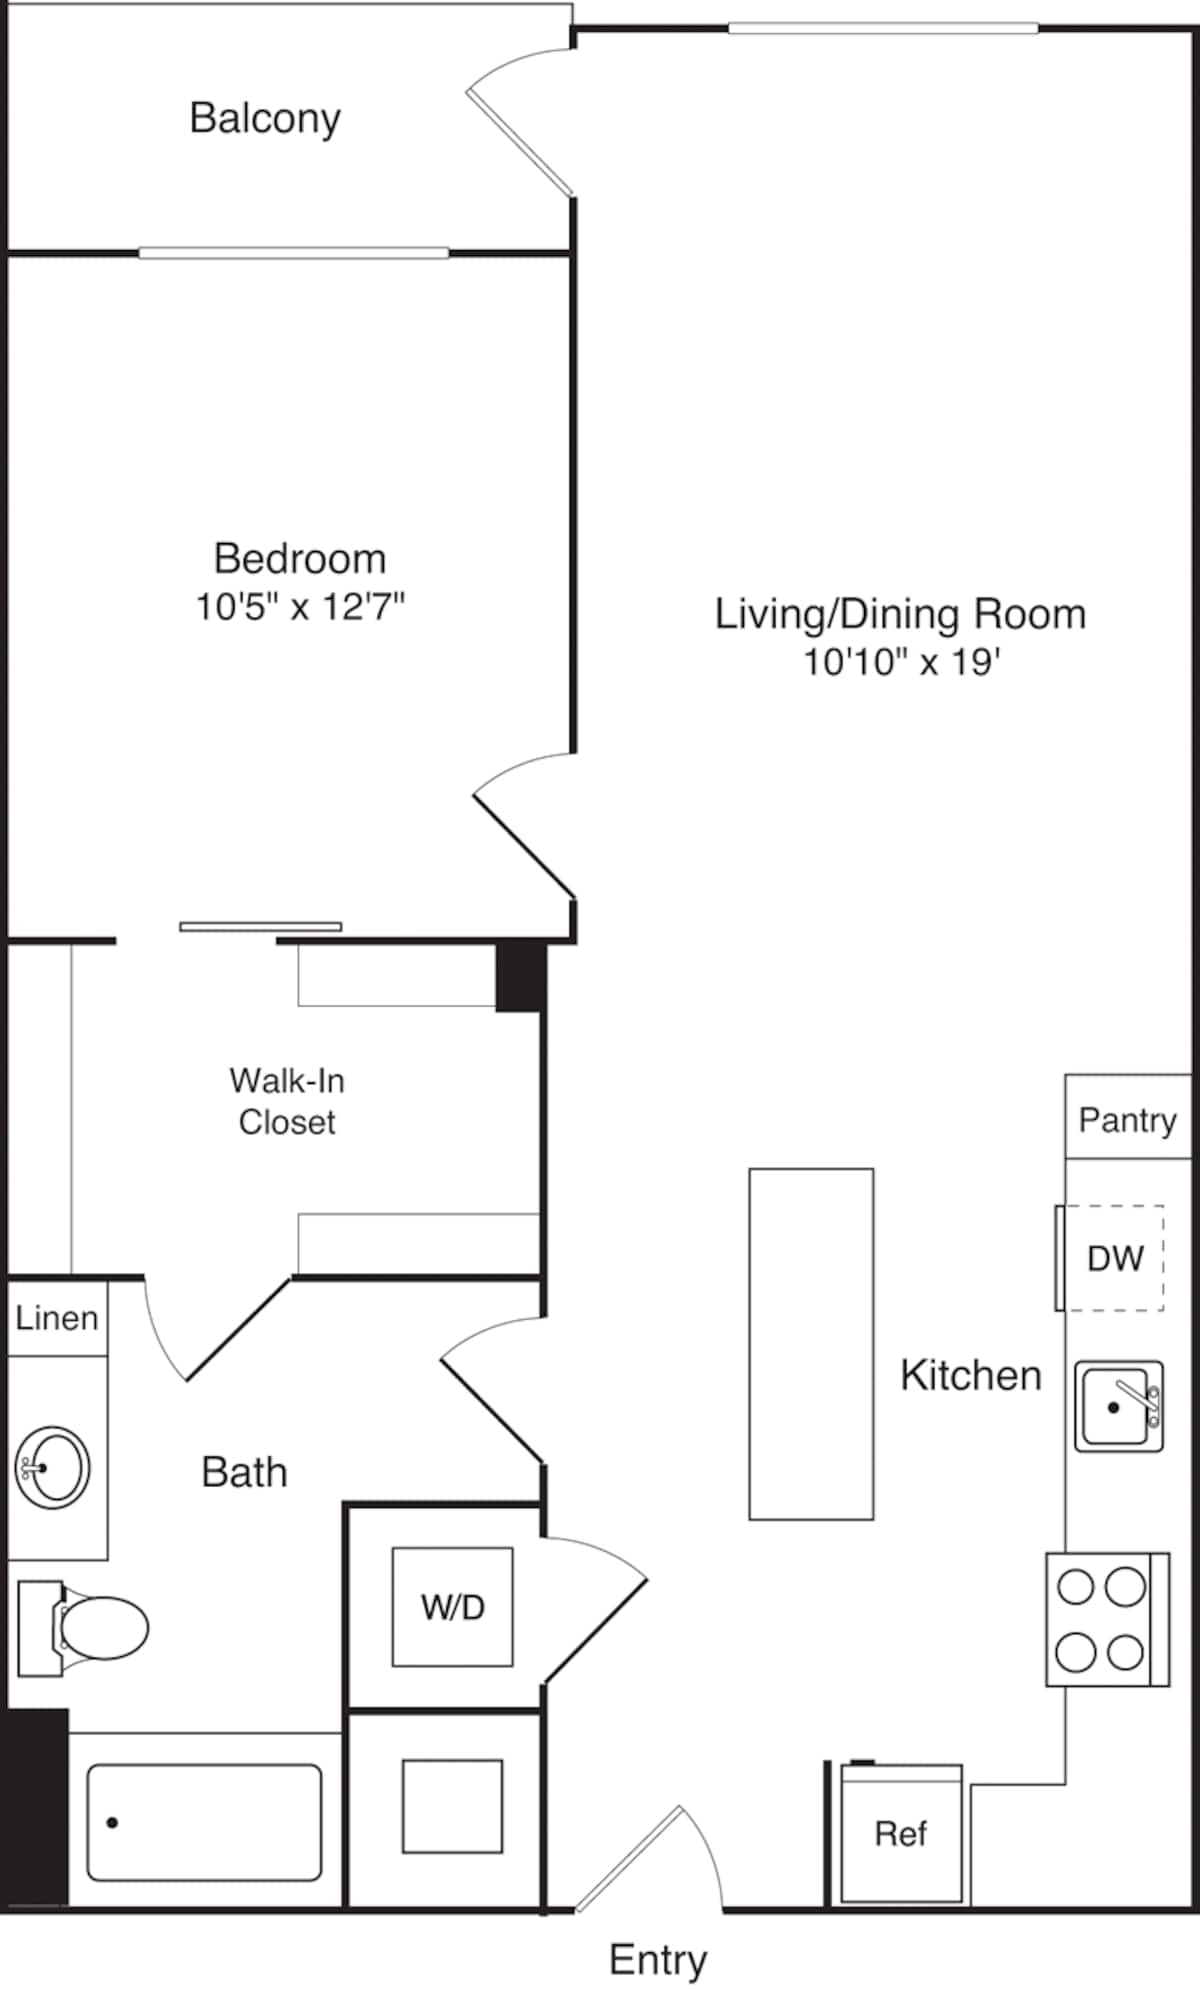 Floorplan diagram for A14, showing 1 bedroom